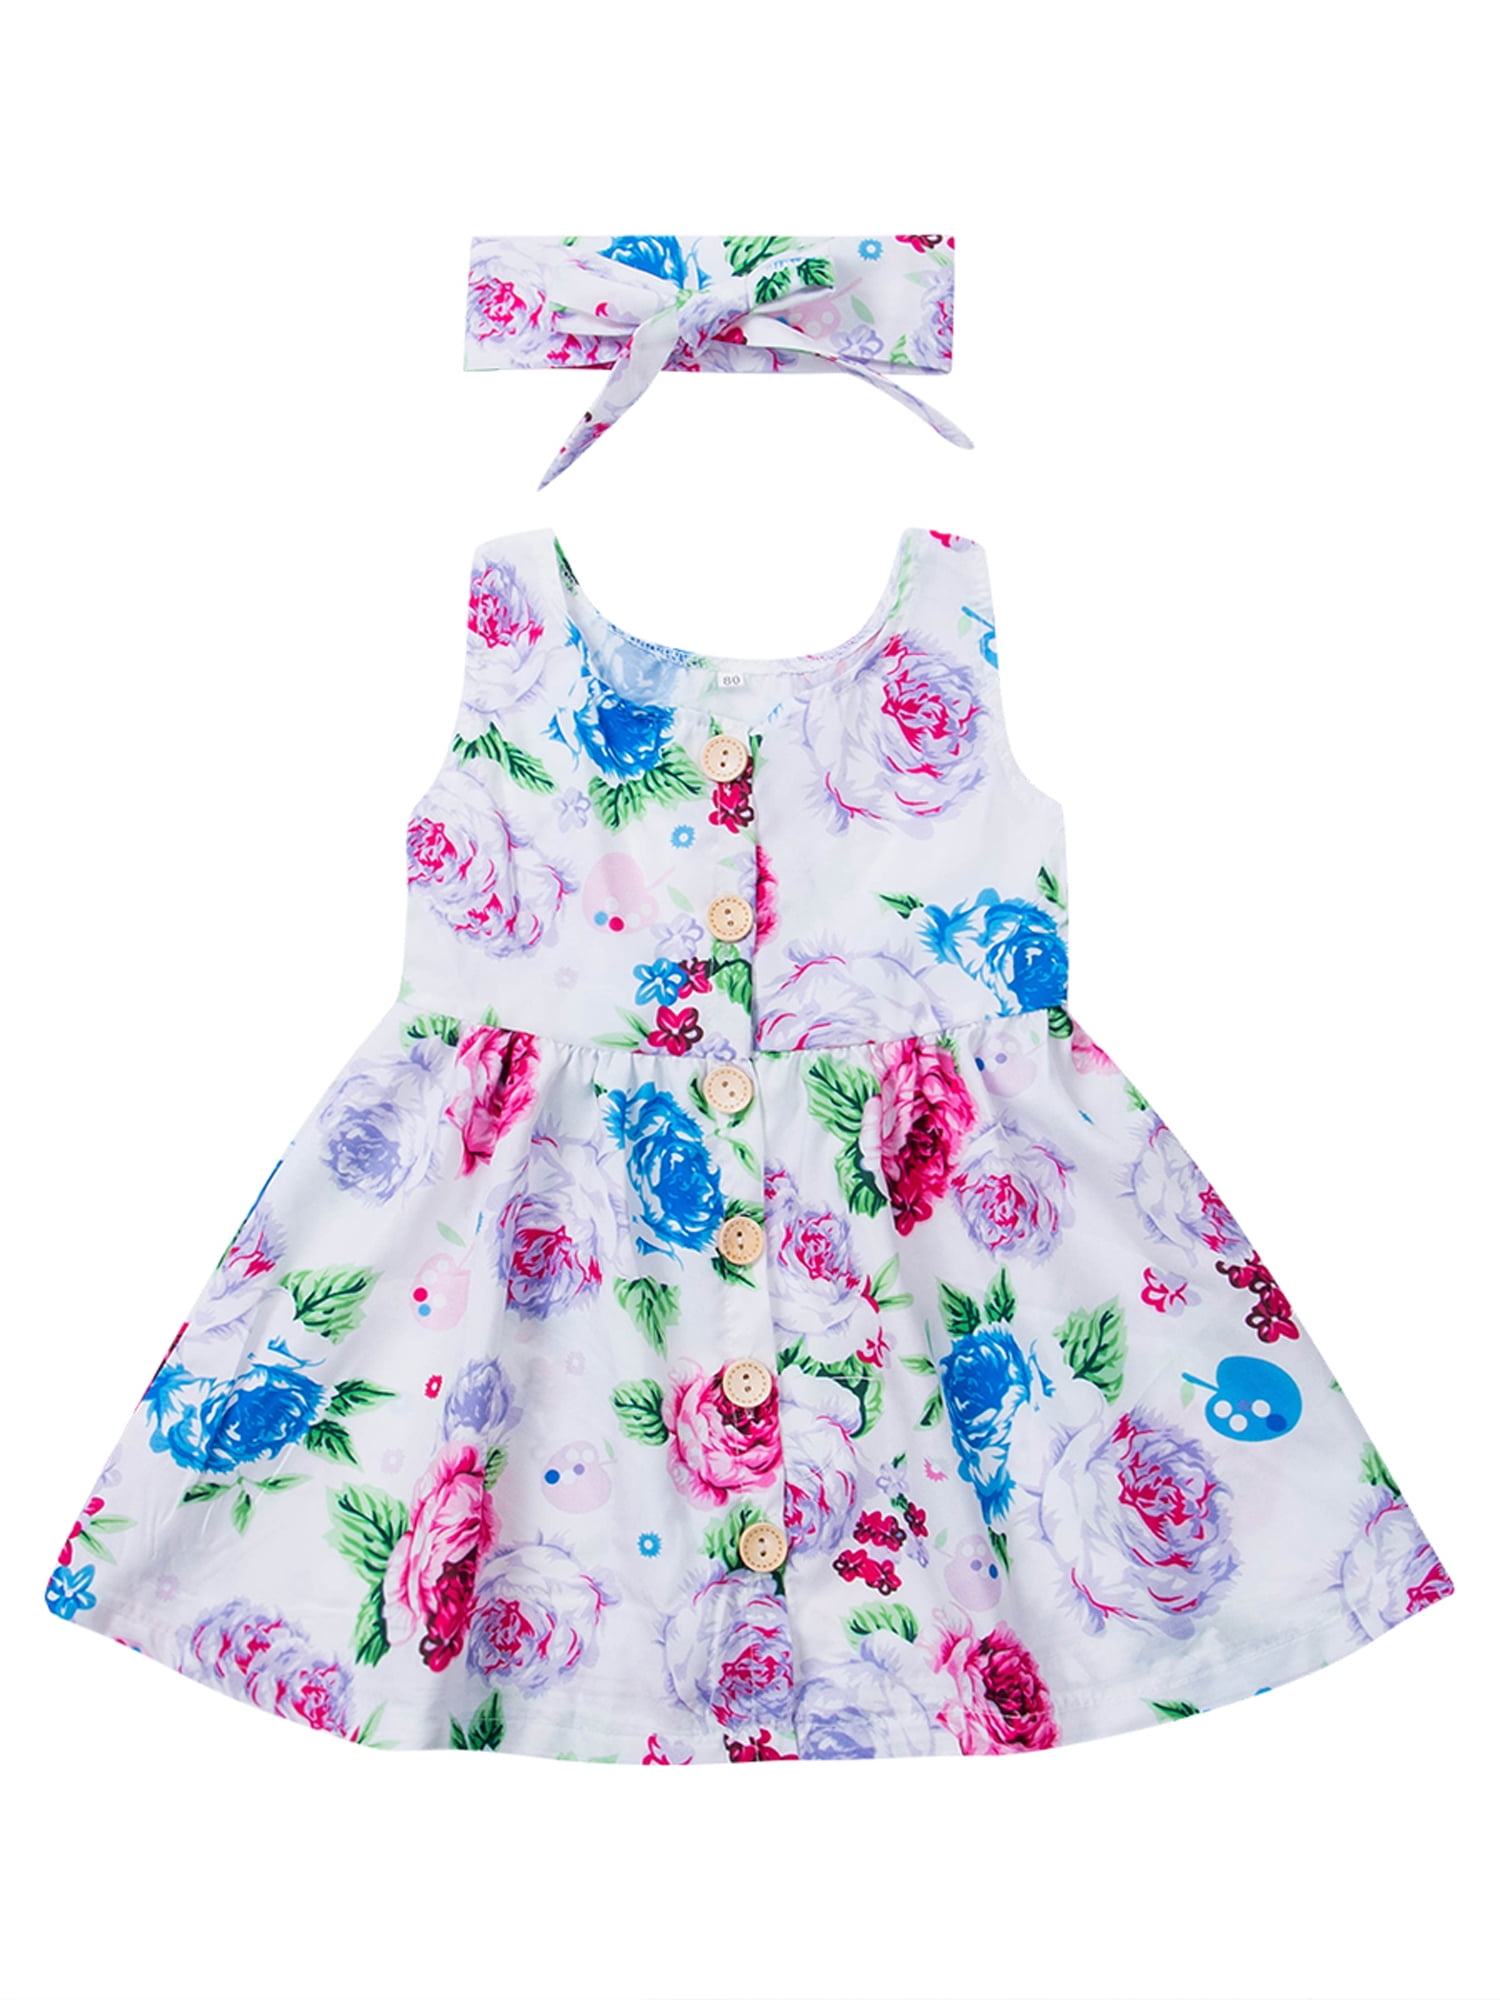 Toddler Kids Baby Girls Summer Florals Print Ruffled Party Casual Dress Sundress 